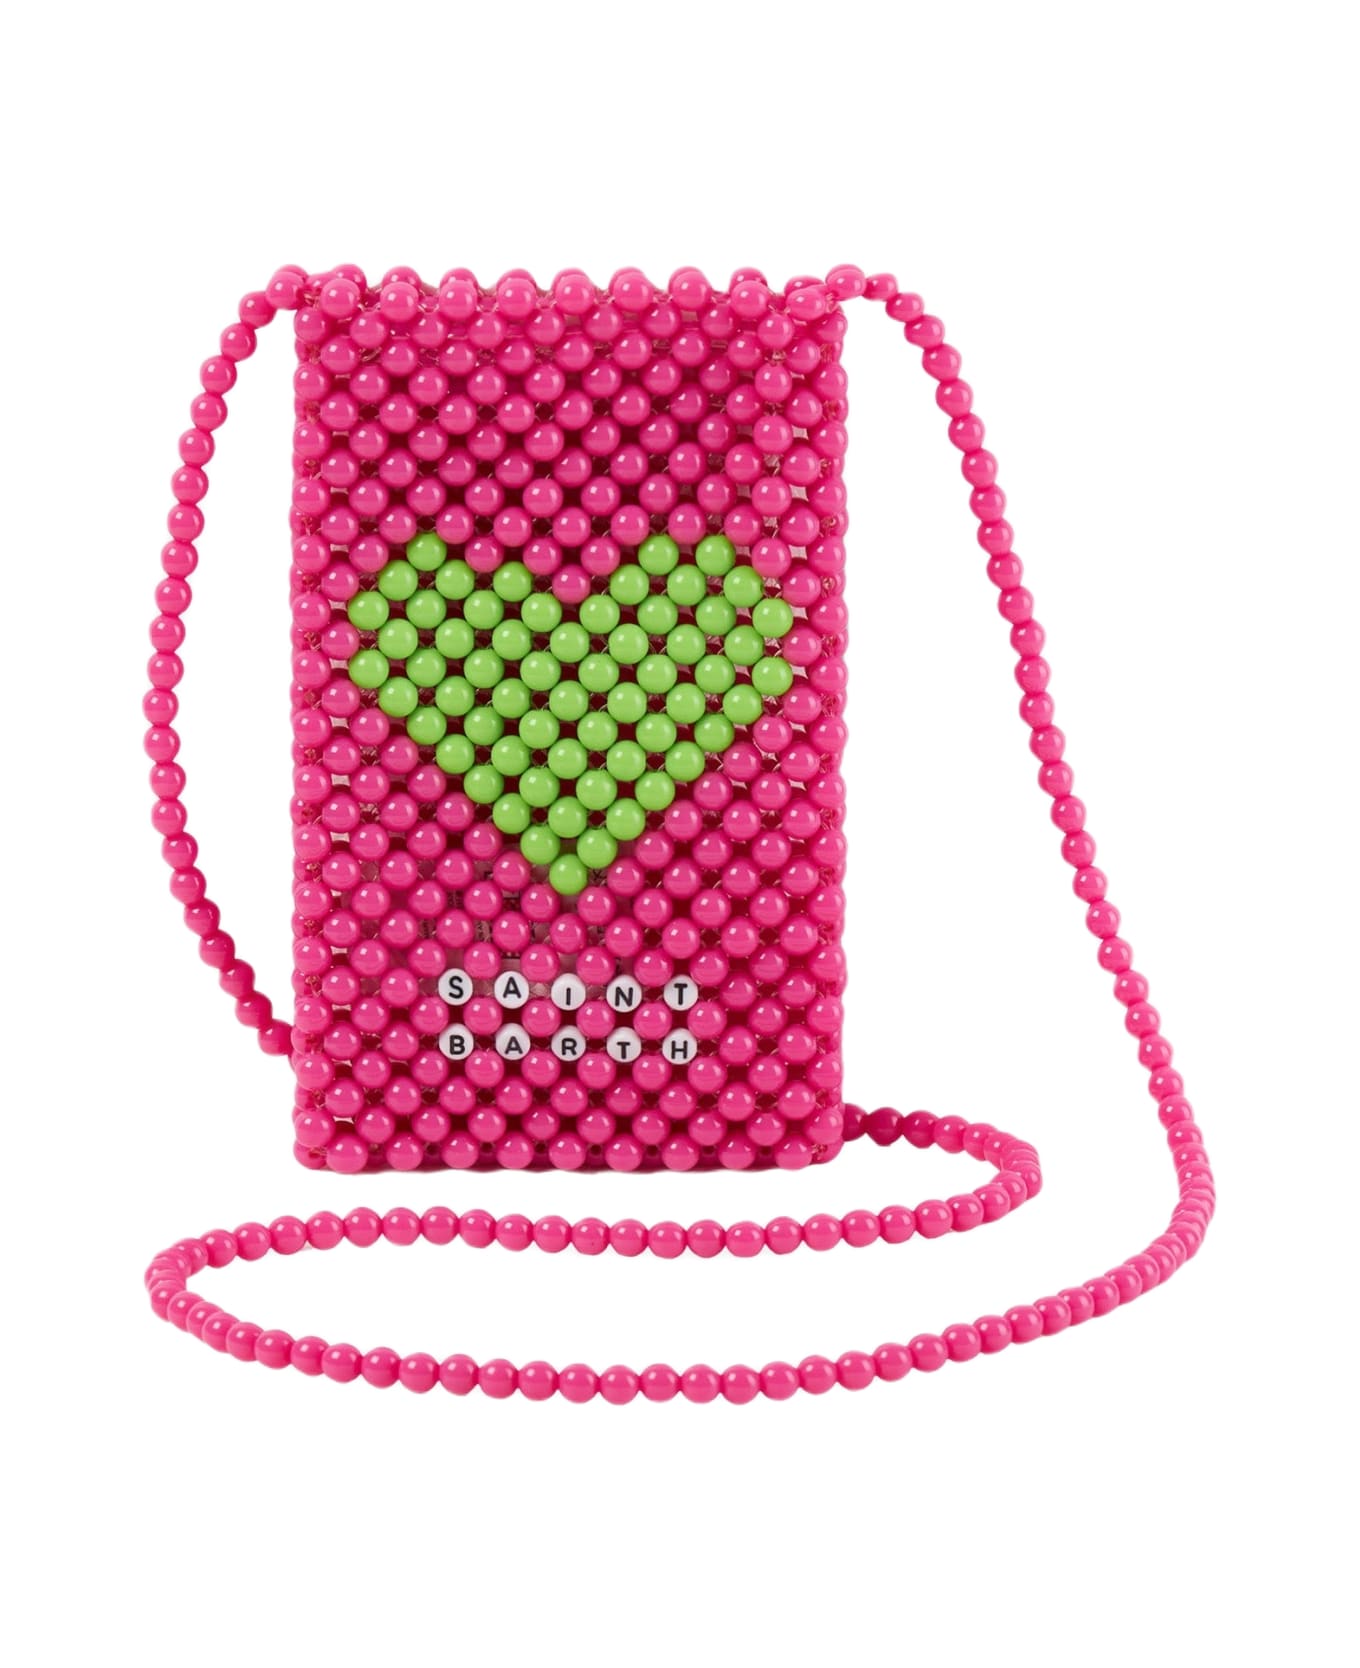 MC2 Saint Barth Pink Beaded Phone Holder With Green Heart - PINK デジタルアクセサリー